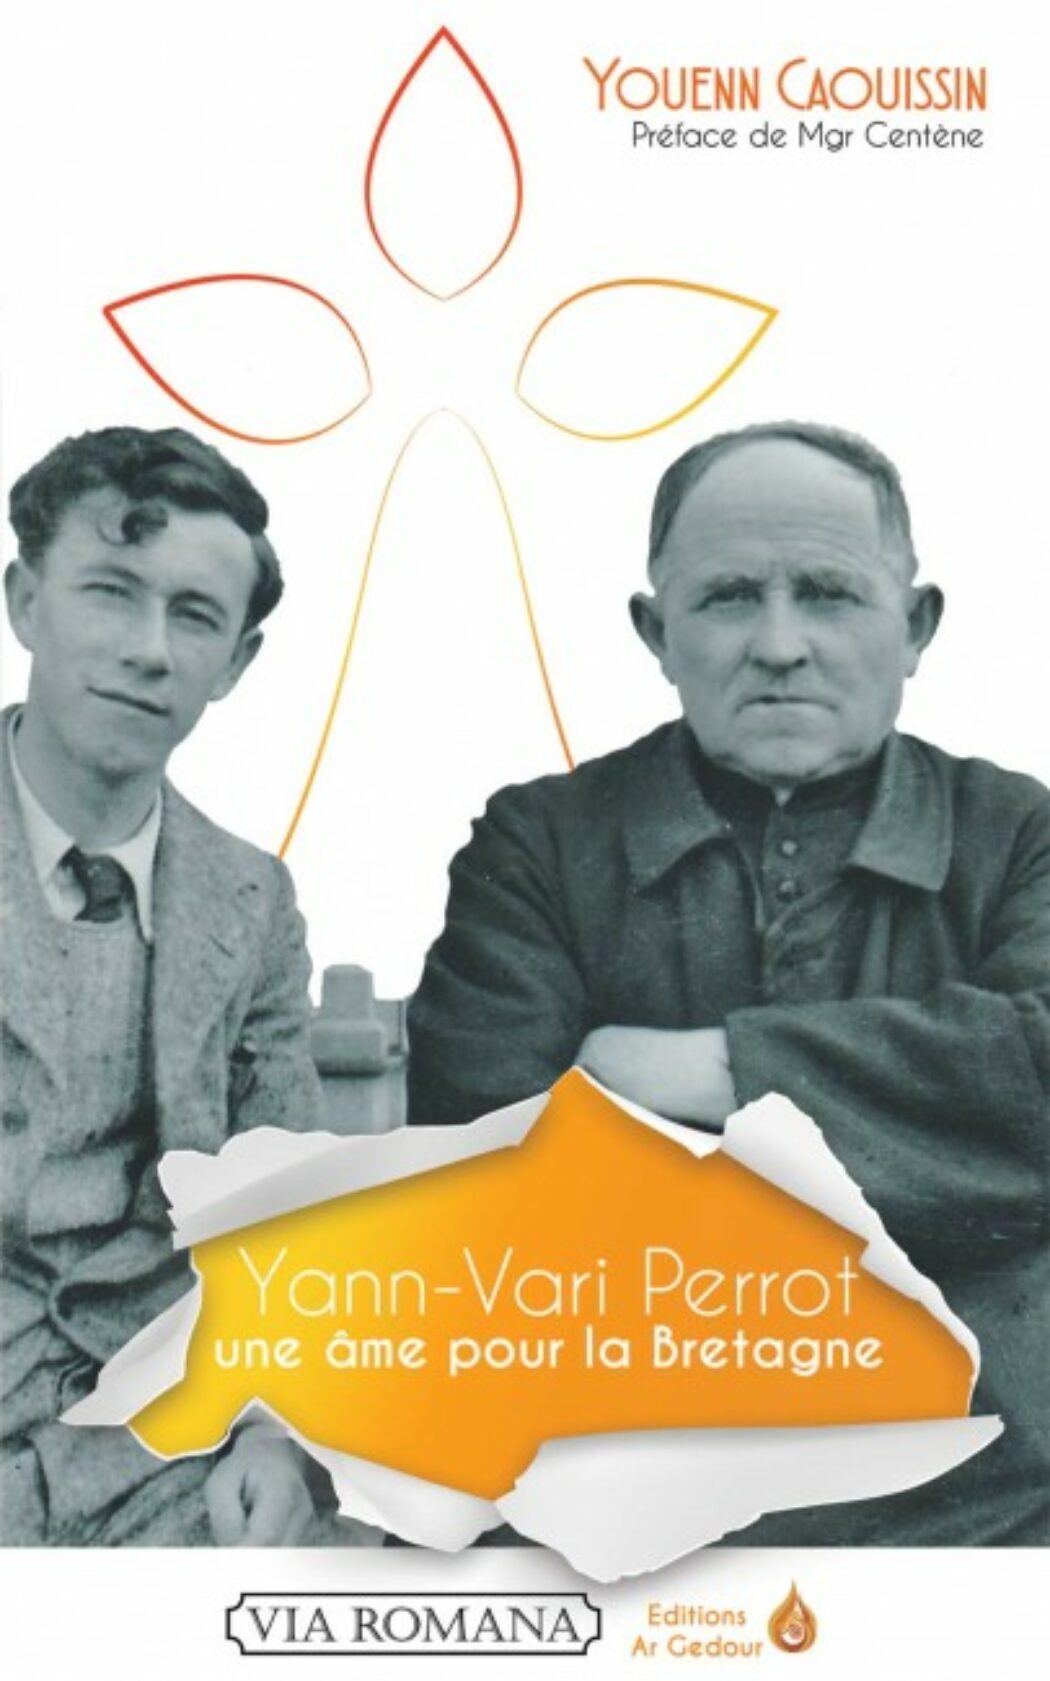 L’abbé Perrot, un martyr des communistes